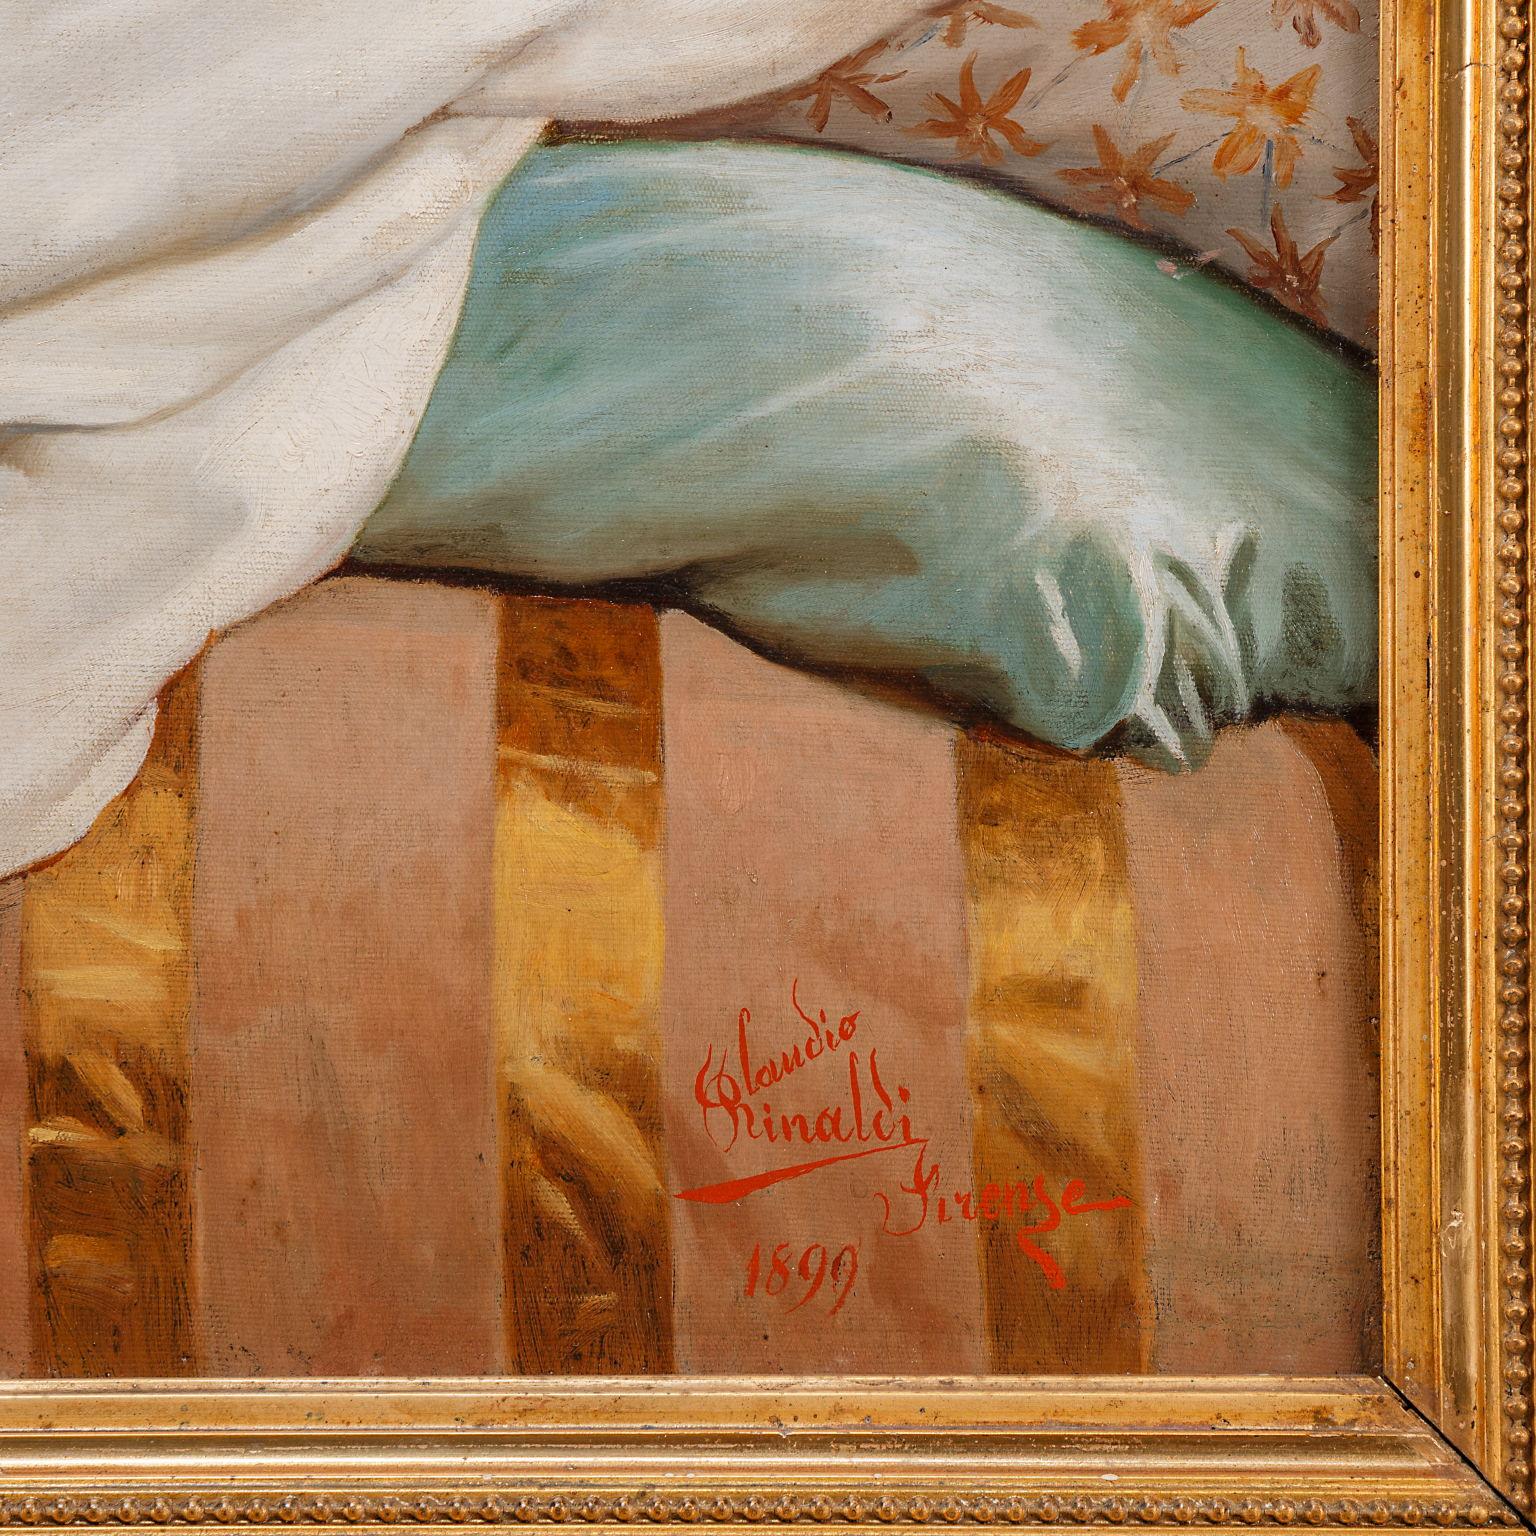 Sleeping Venus, Claudio Rinaldi, 1899 6